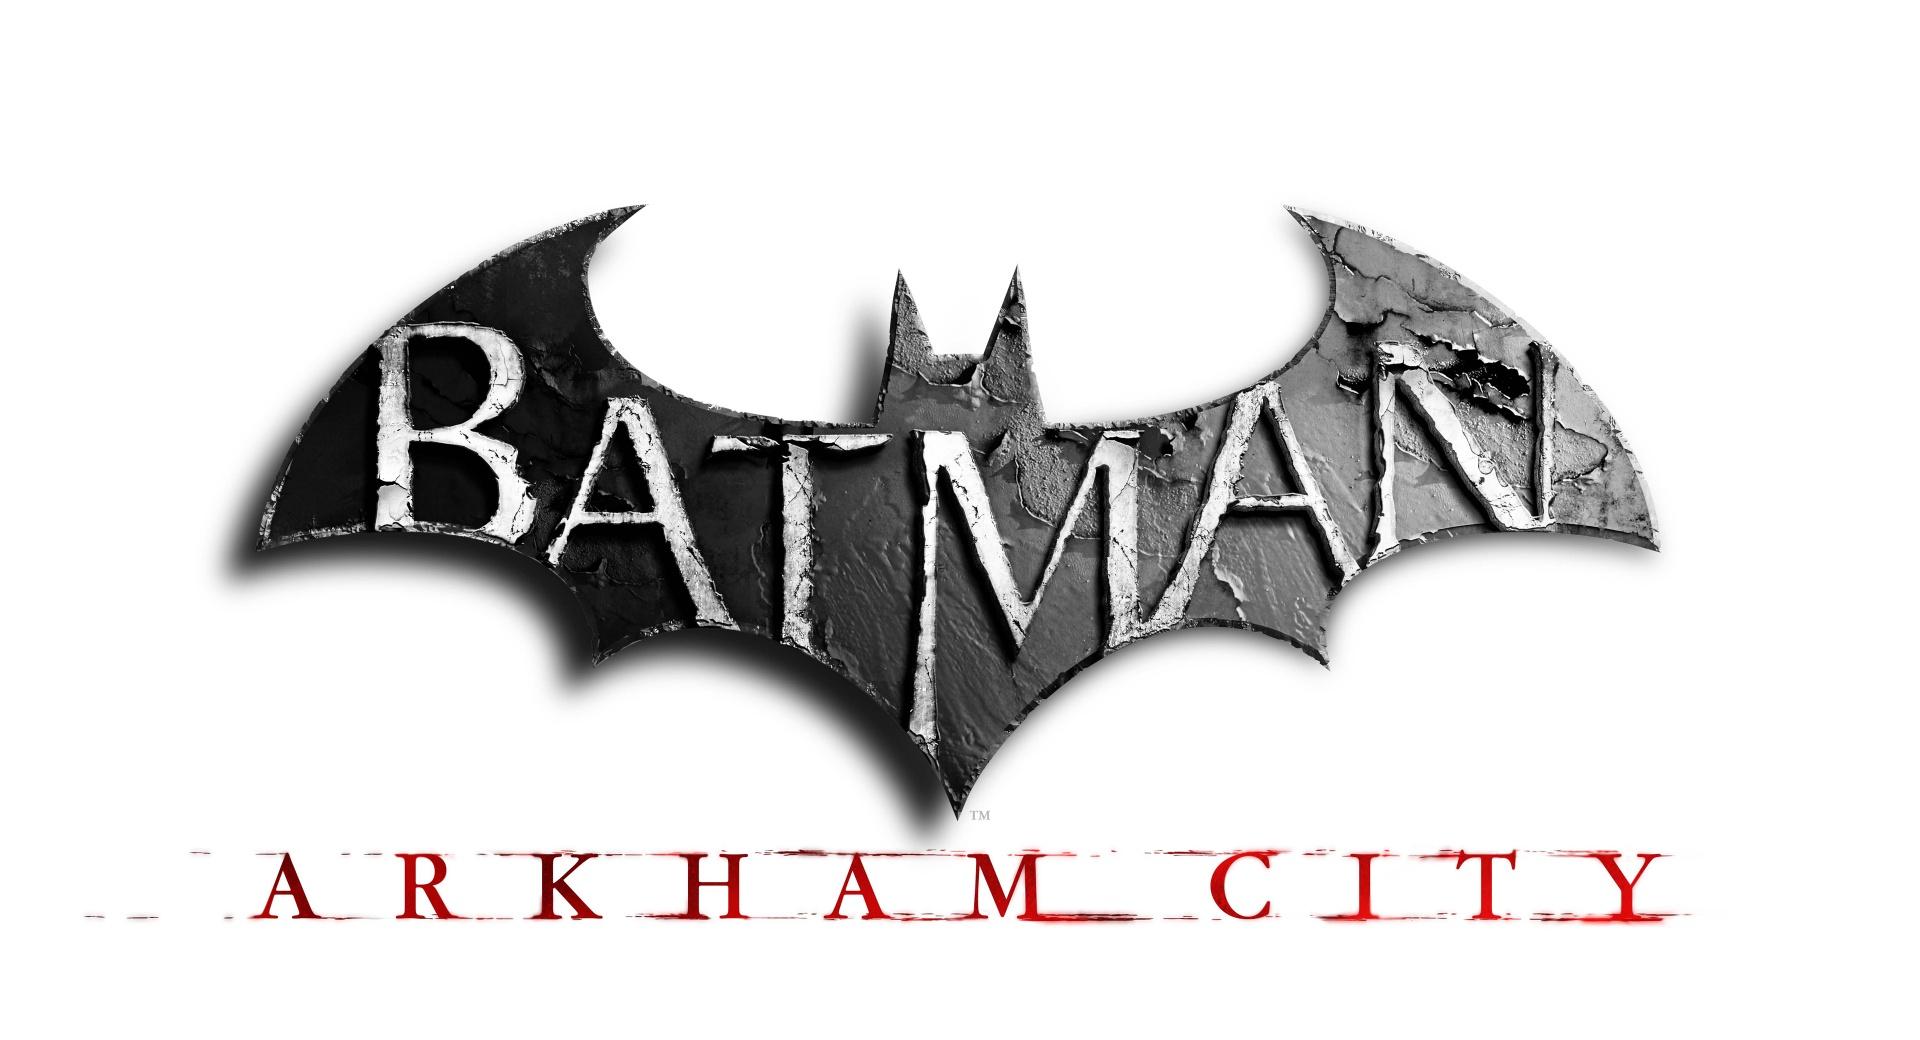 Batman Arkham City Official Logo at 1024 x 1024 iPad size wallpapers HD quality